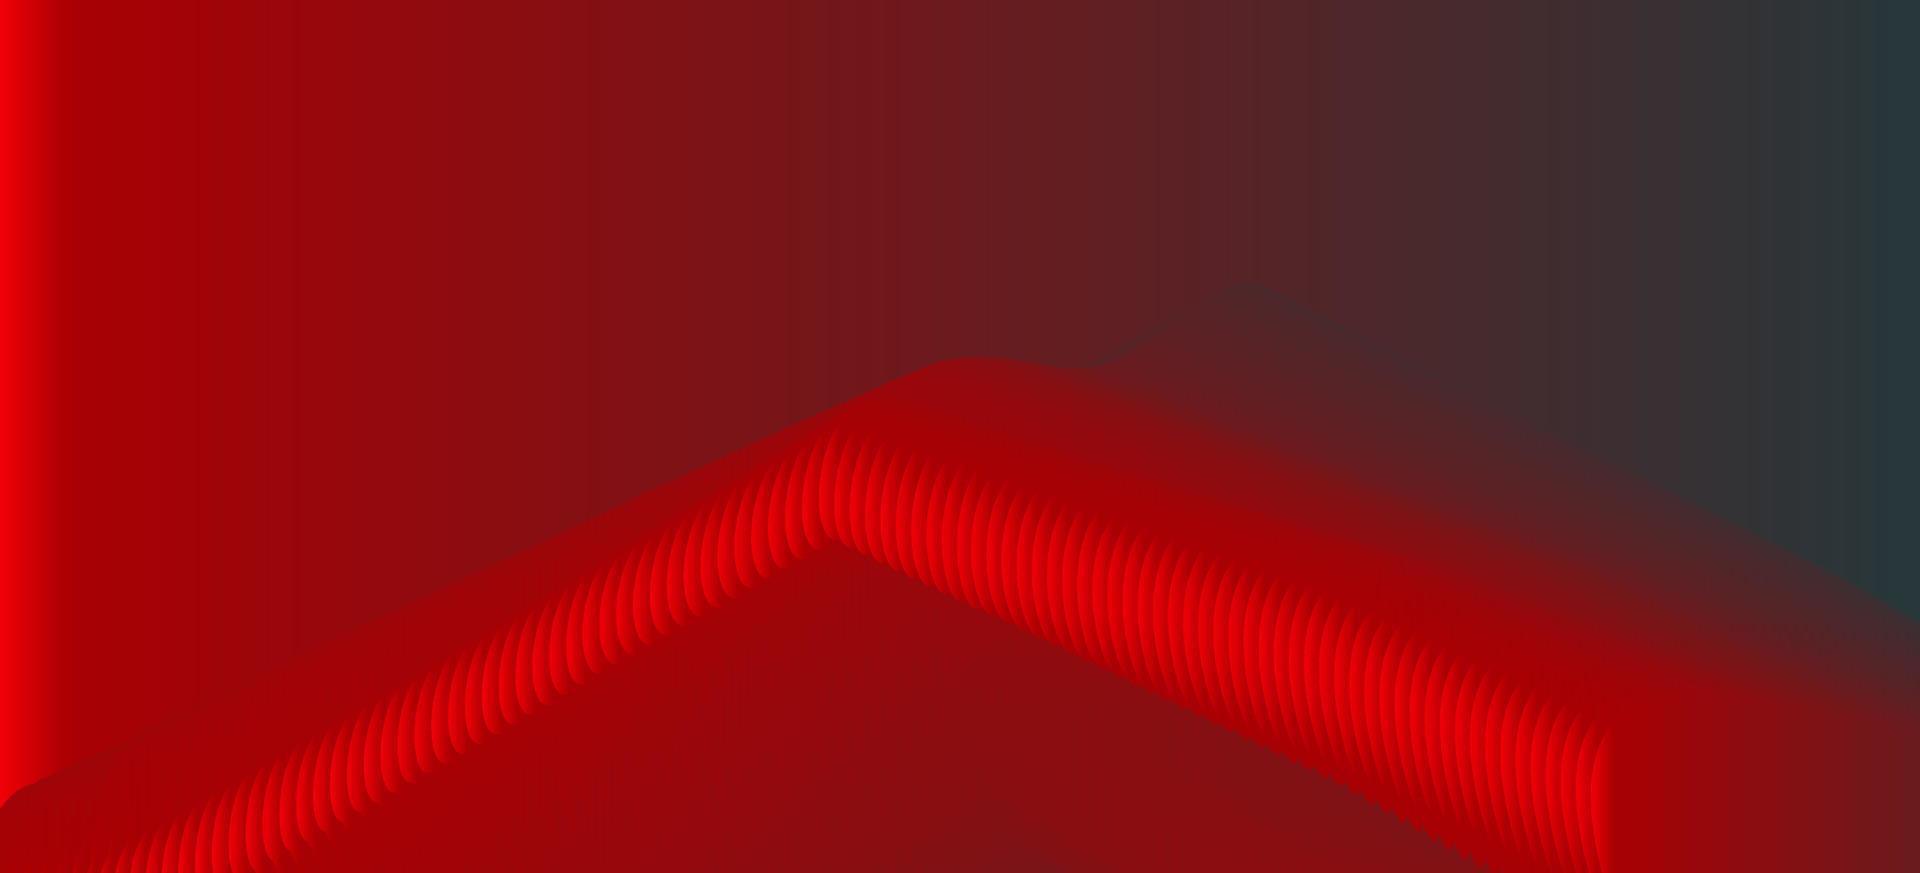 vetor vermelho abstrato gradiente fundo livre